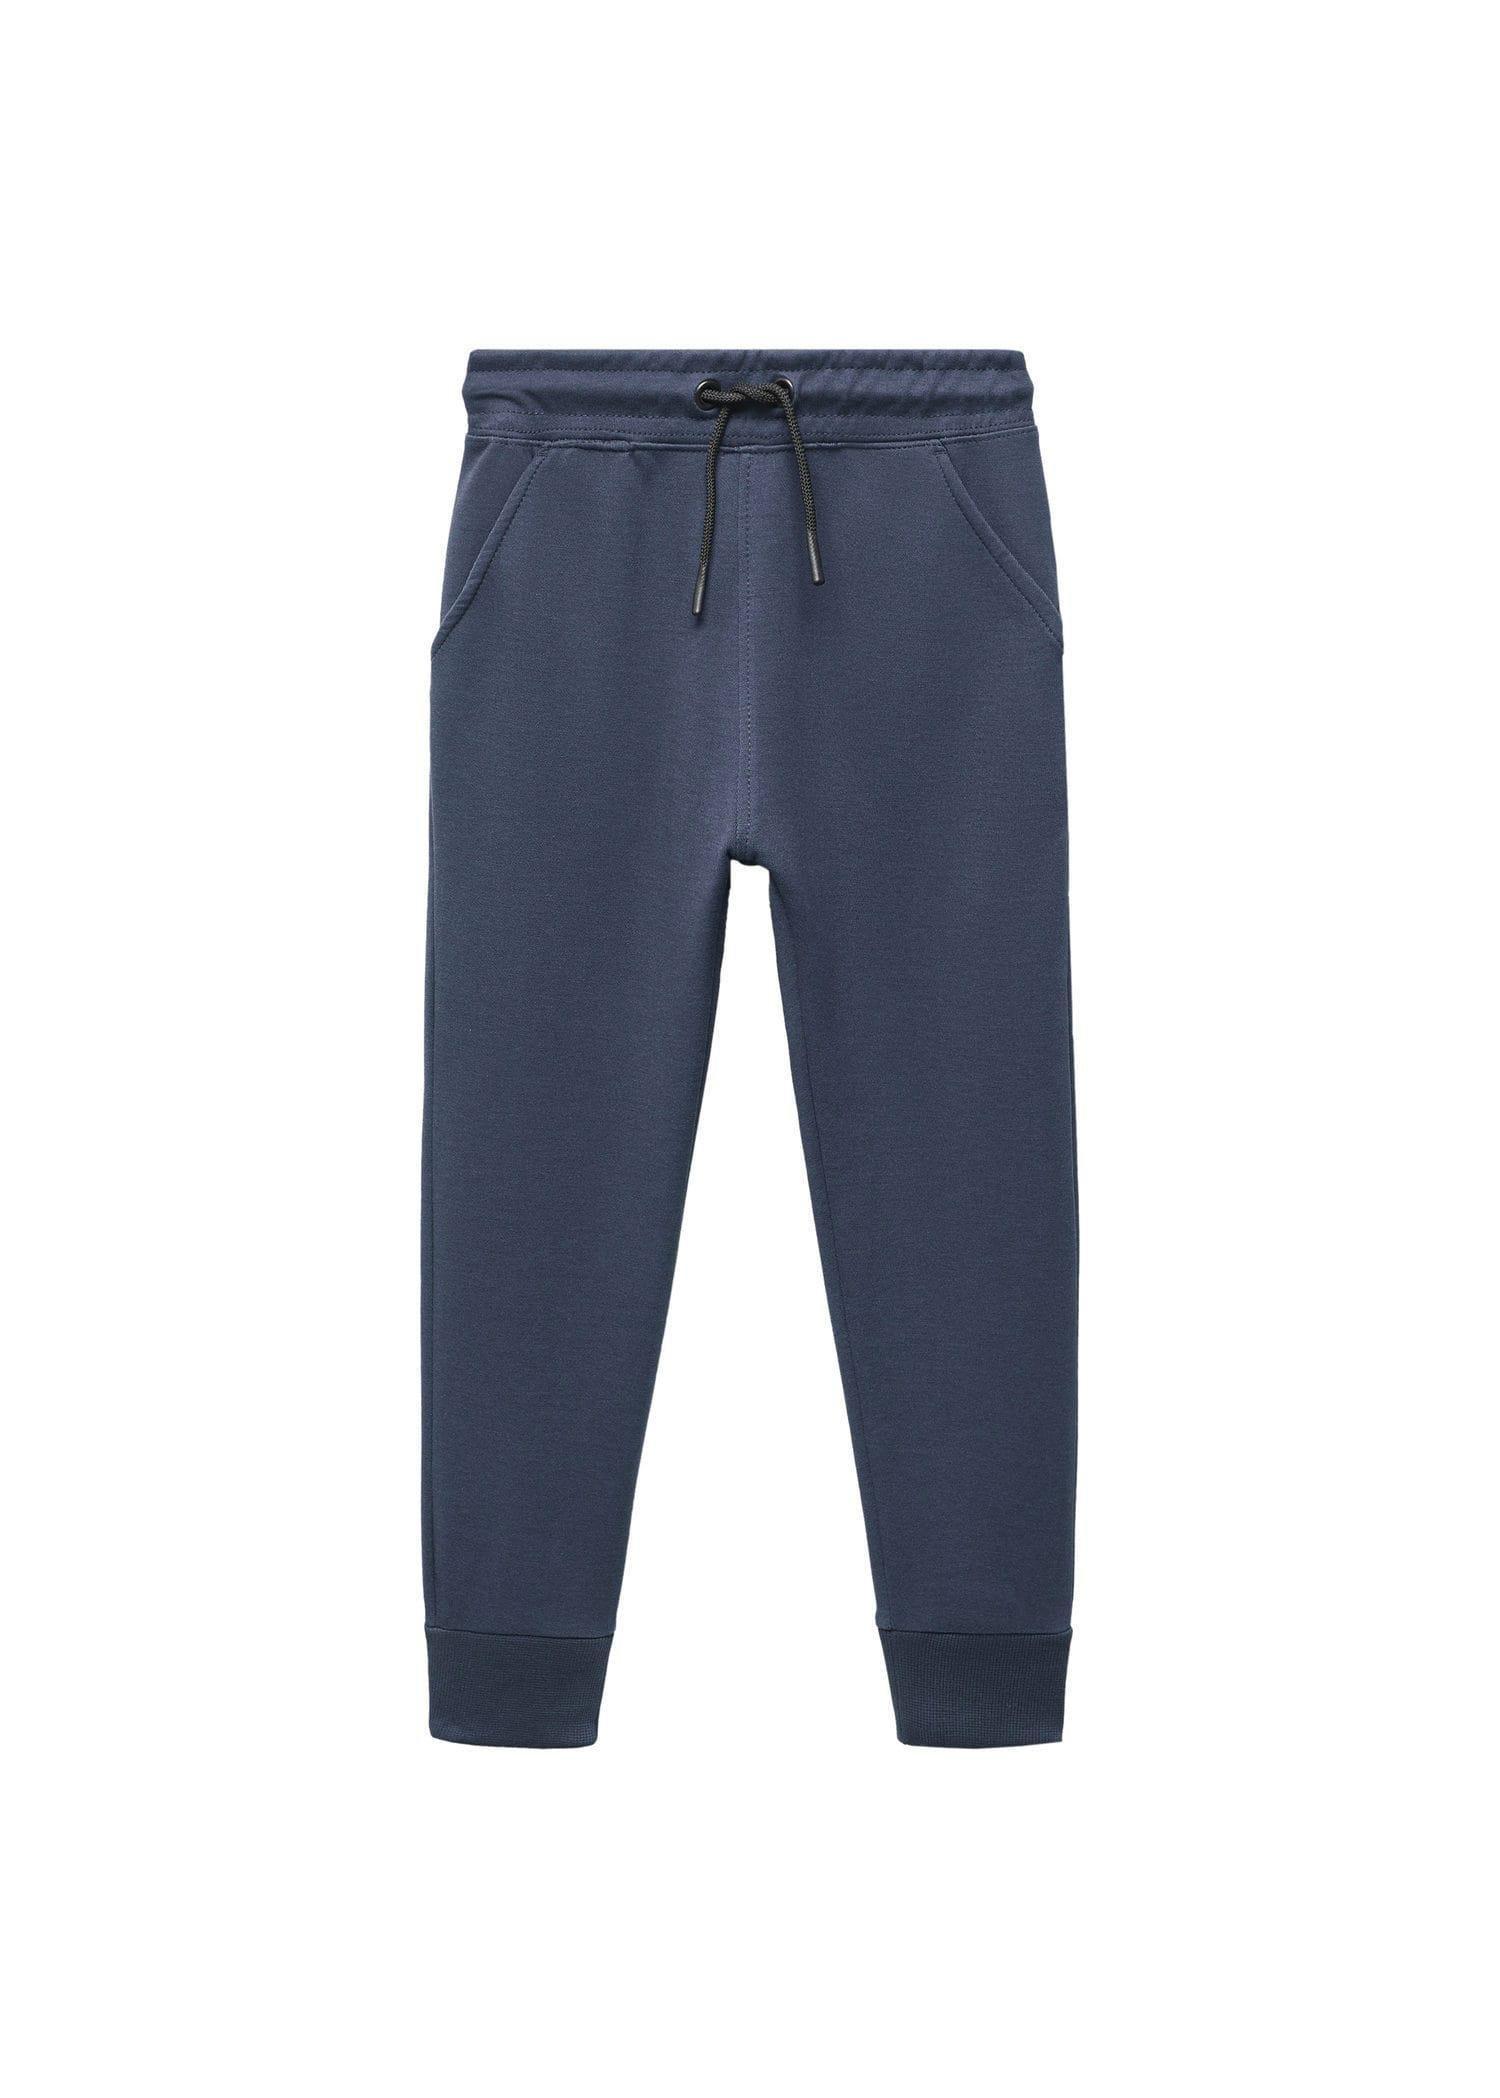 Mango - Navy Cotton Jogger-Style Trousers, Kids Boys